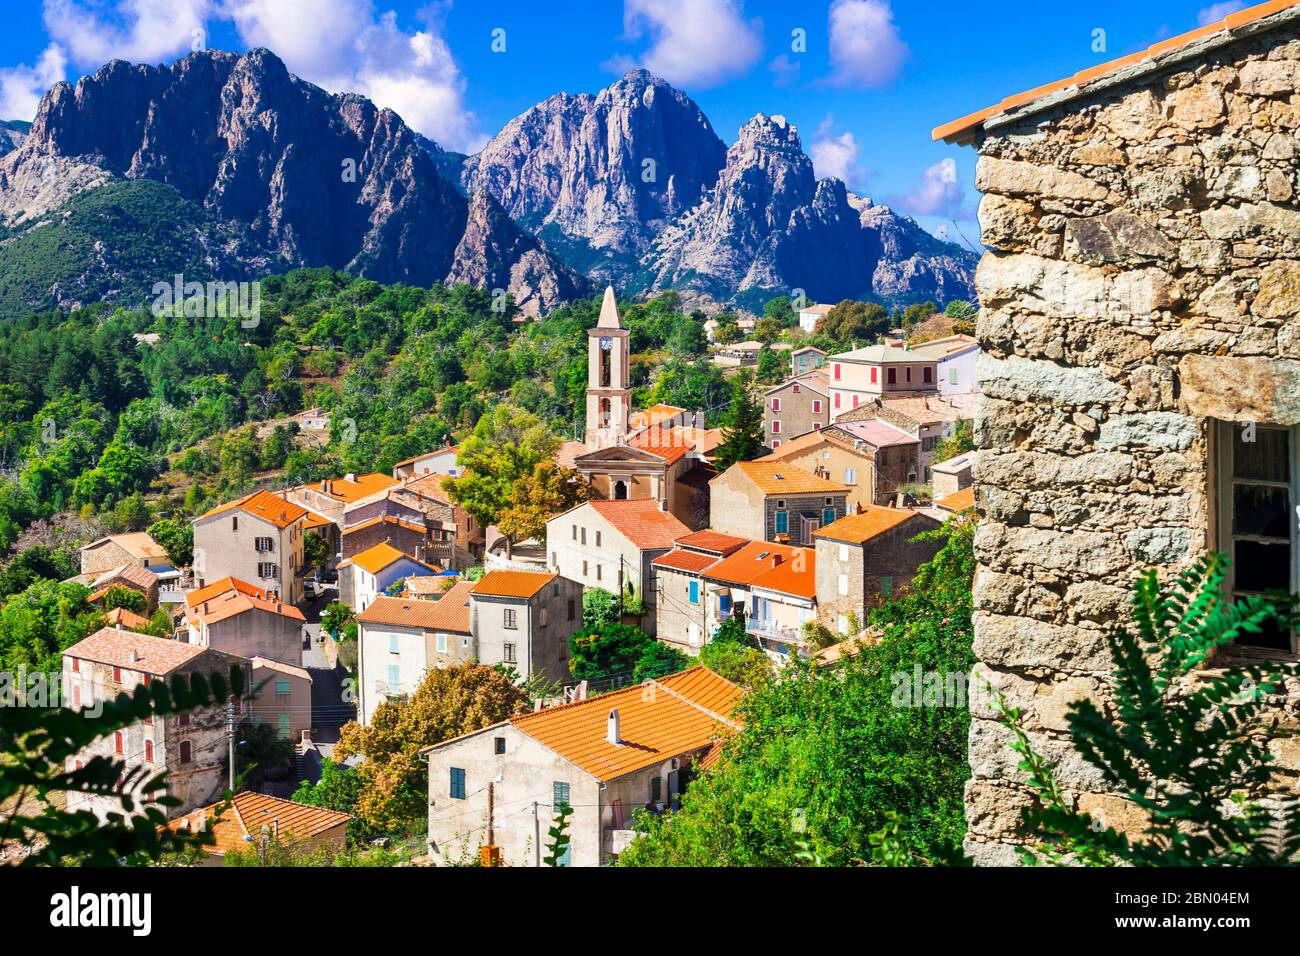 Evisa - small picturesque mountain village in splendid mountains of Corsica island,France. Stock Photo